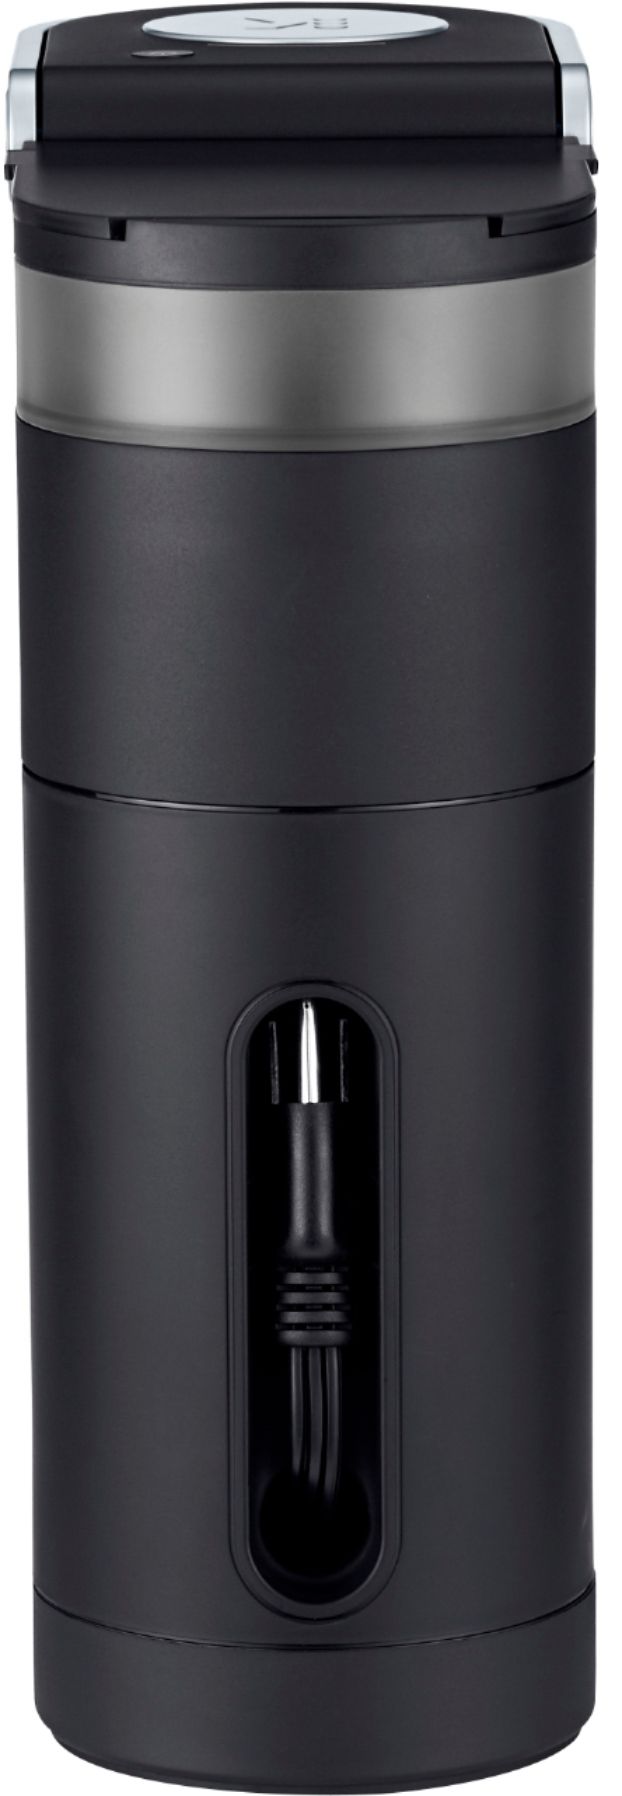 Keurig K-Mini Plus Single Serve Coffee Maker - Black 12in 1Ct Box